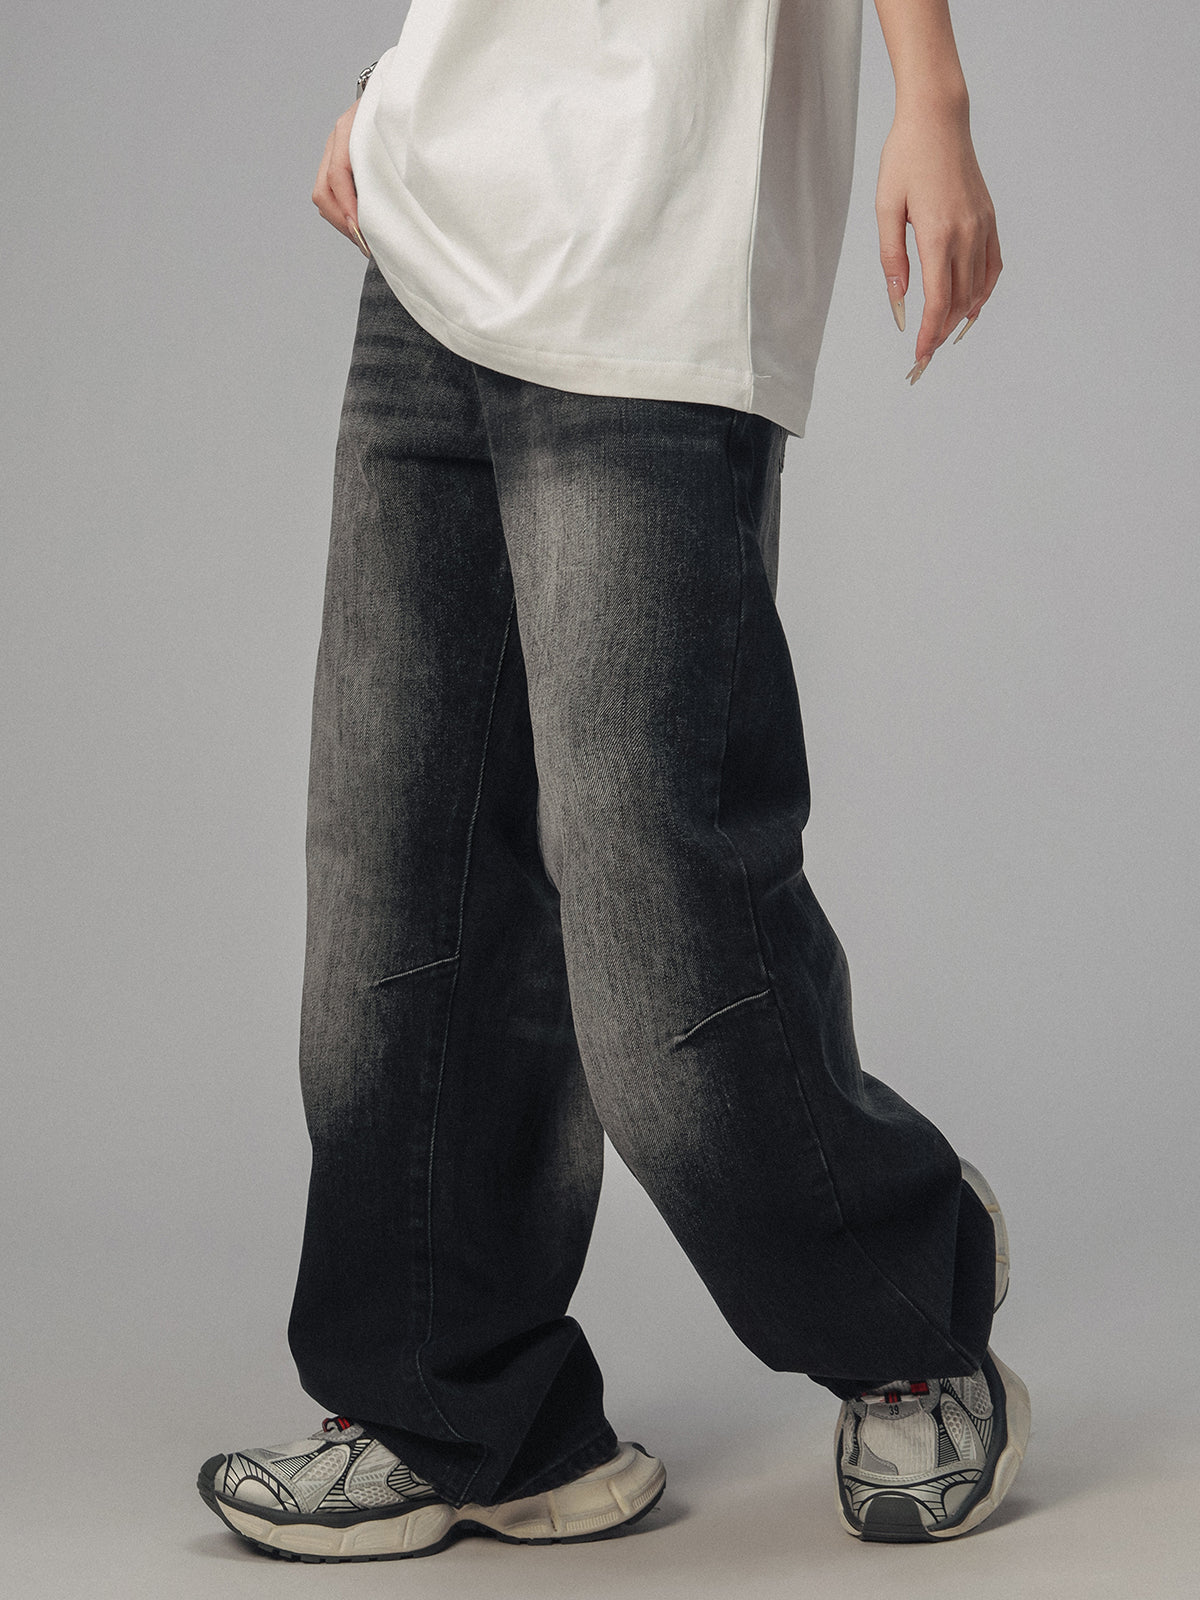 American high cleanfit long pants